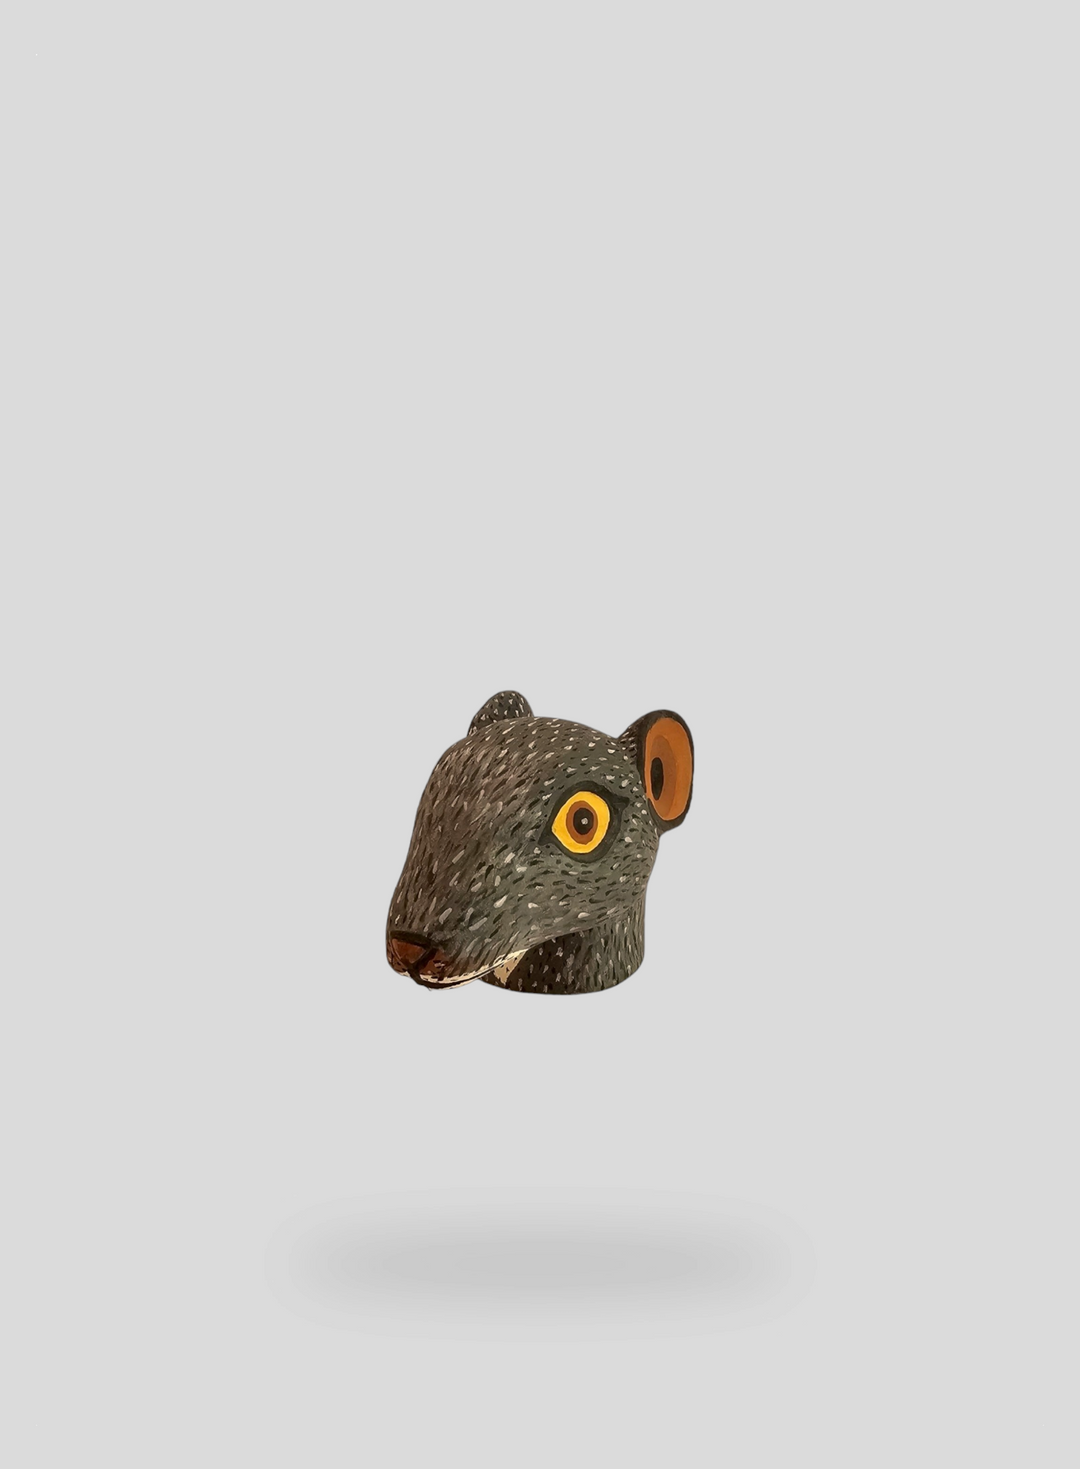 The Mini Mouse Sculpture